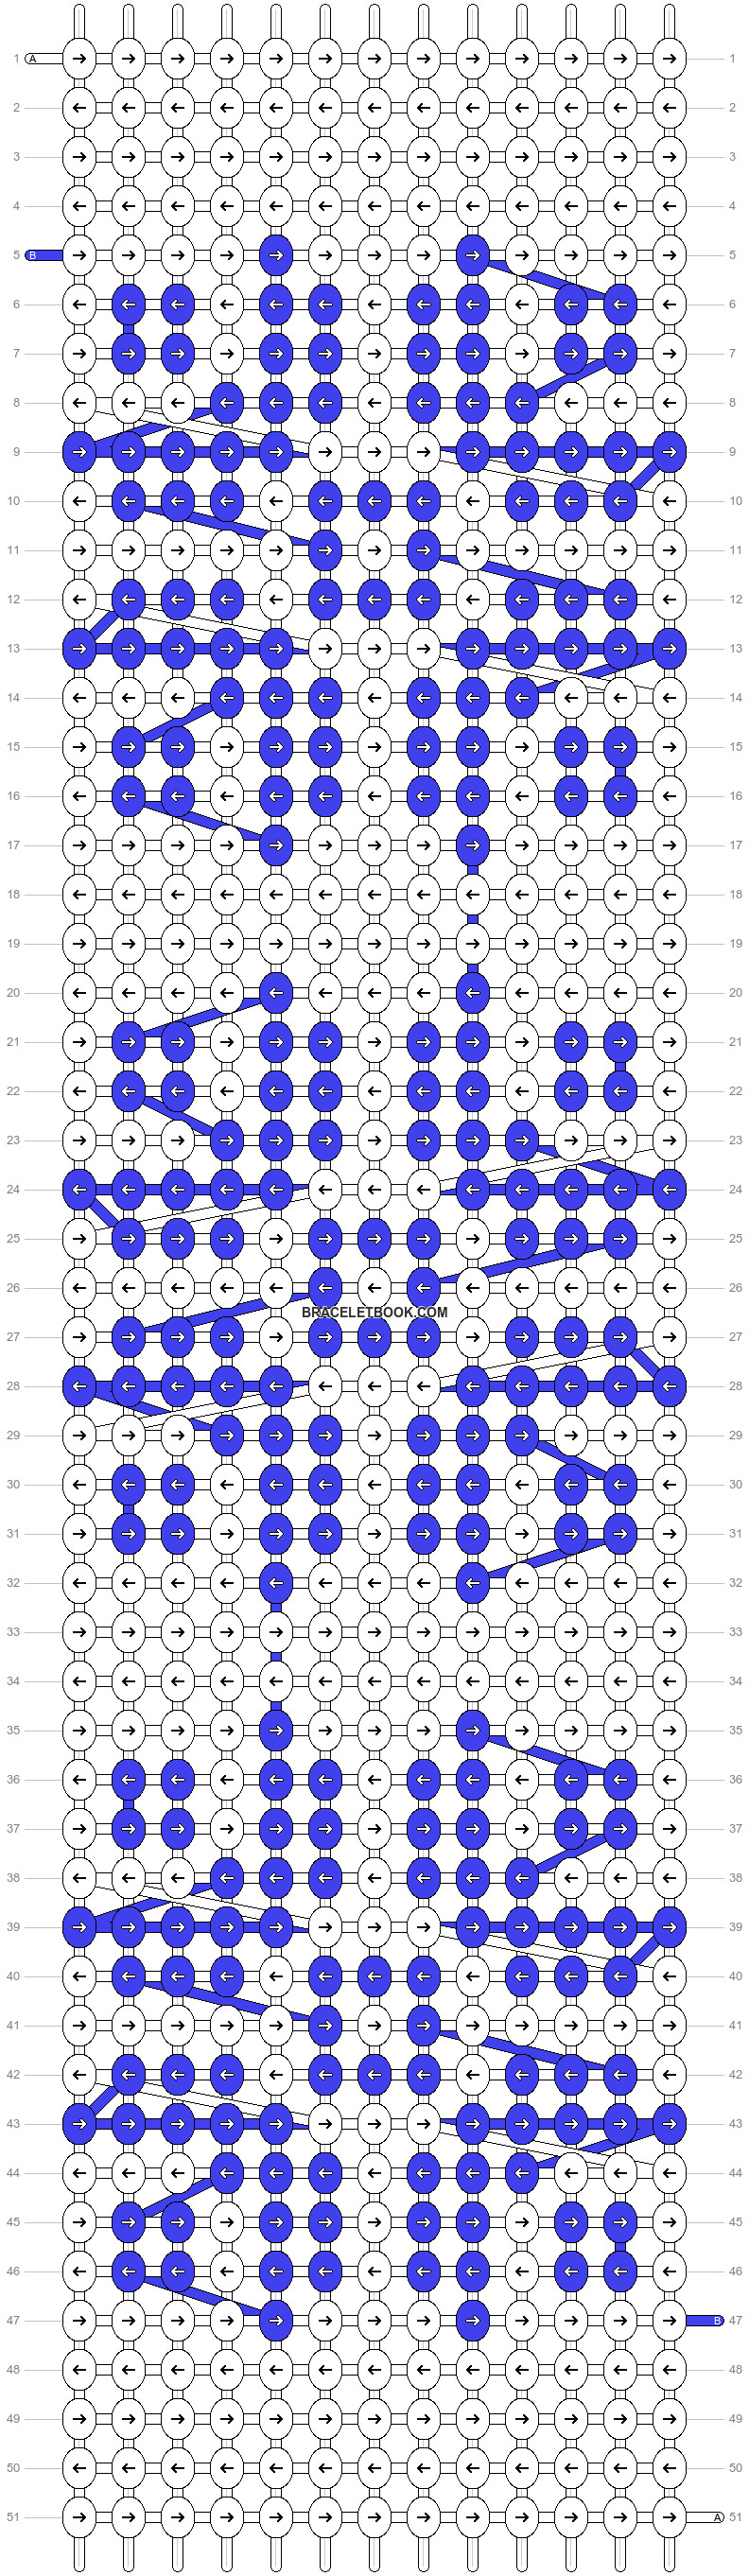 Alpha pattern #18126 pattern